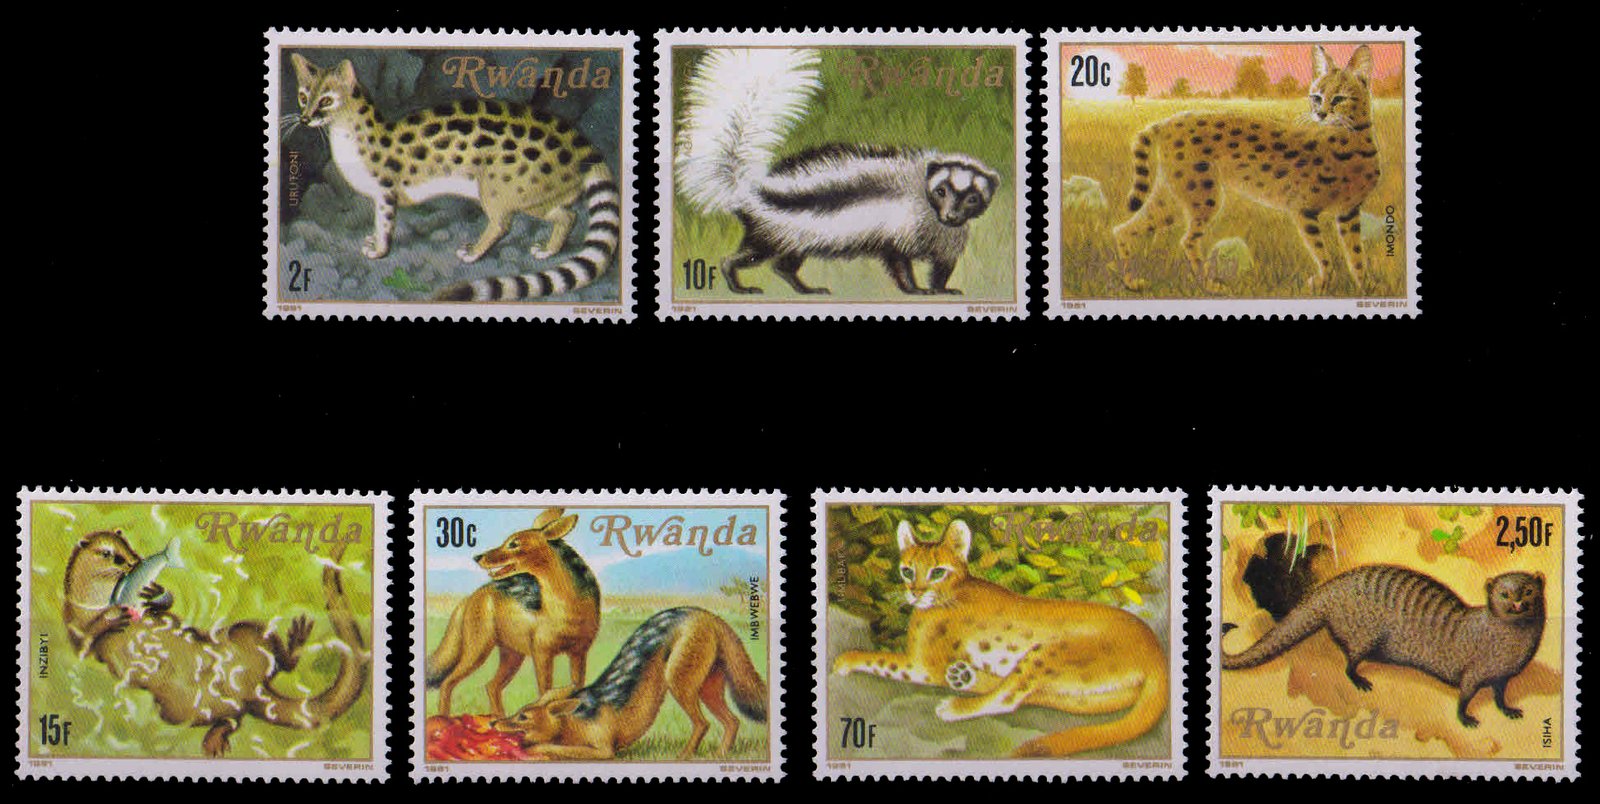 RWANDA 1981-Carnivorous Animals, Cat, Jackal, Serval Genet, Mongoose, Zorille, Set of 7 Stamps, MNH, S.G. 1049-1055-Cat £ 9-